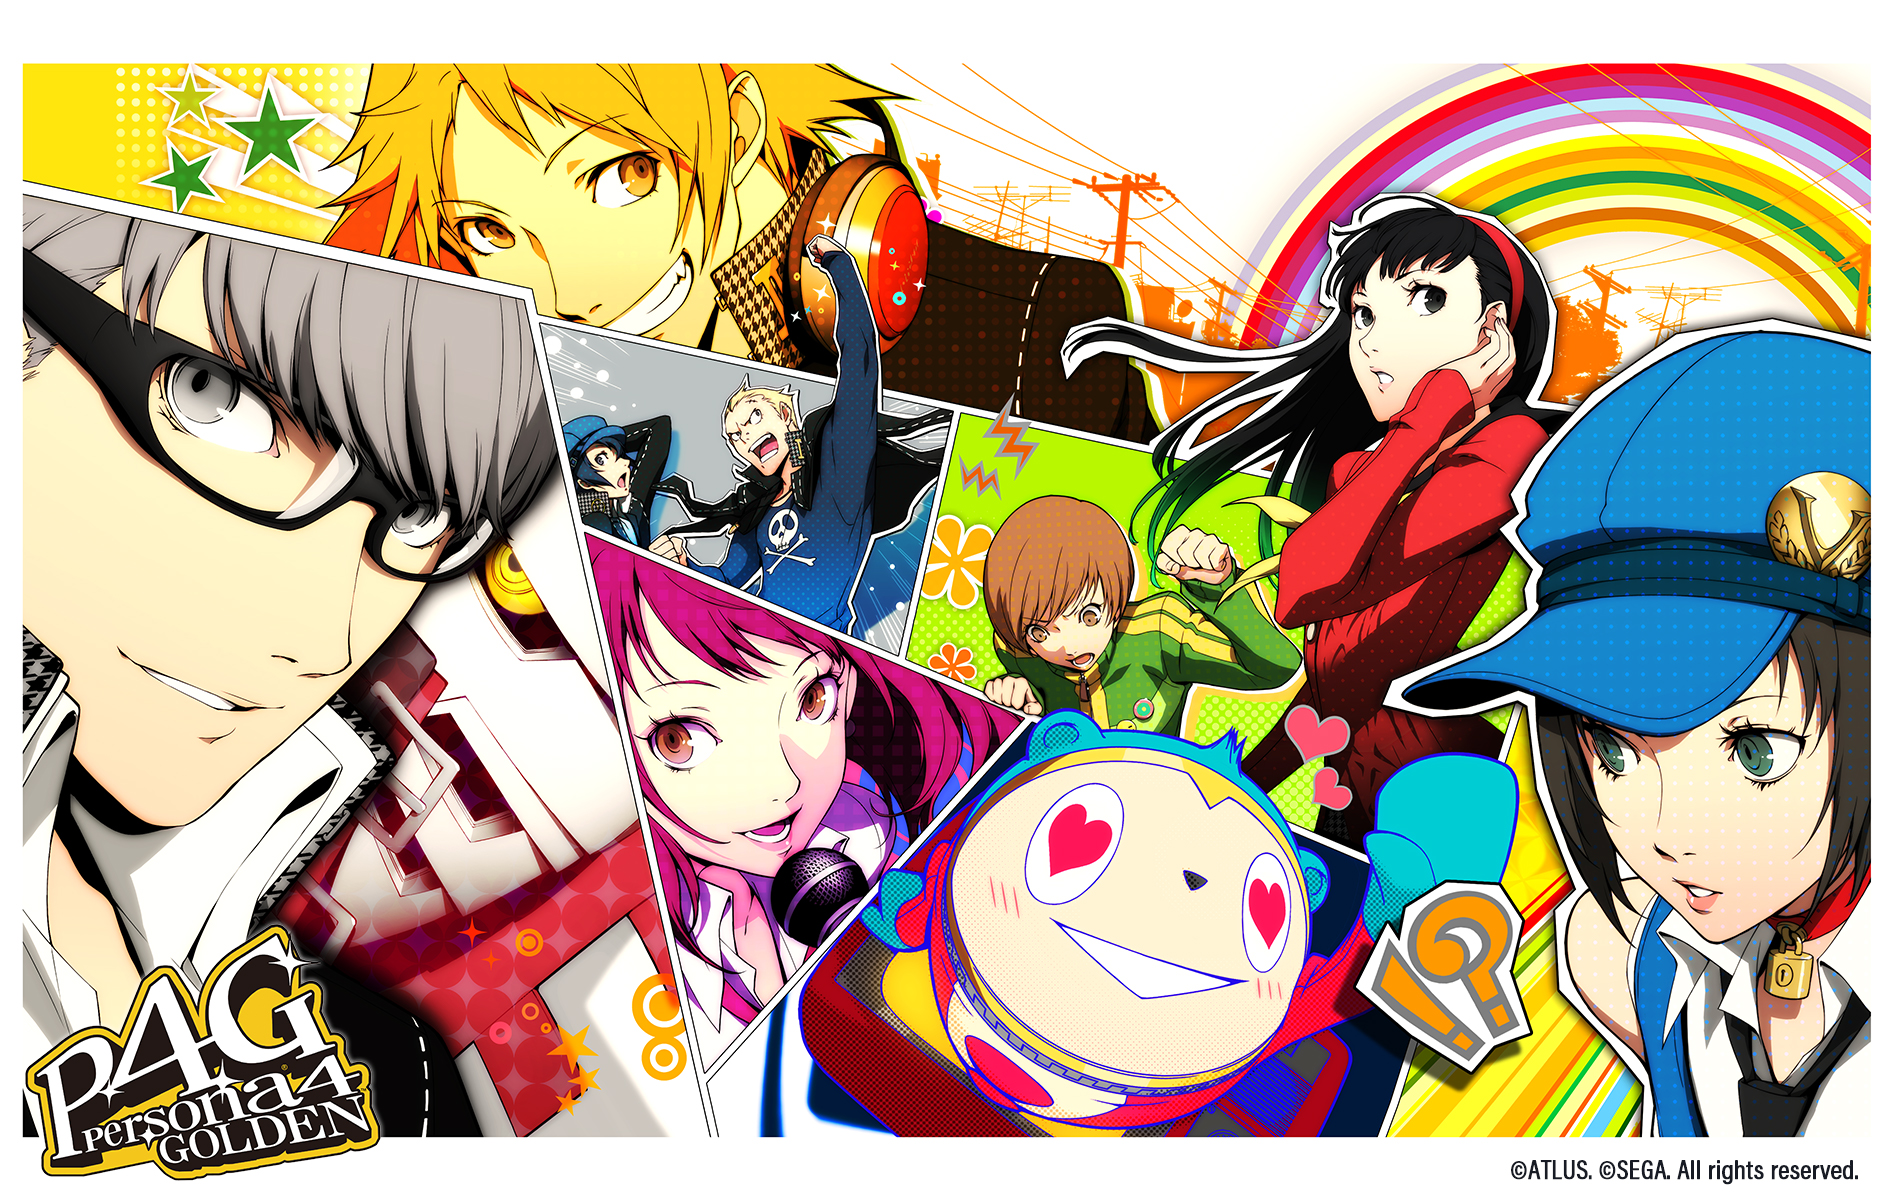 Games Movies Music Anime My Persona 4 Golden Yukiko Wallpaper